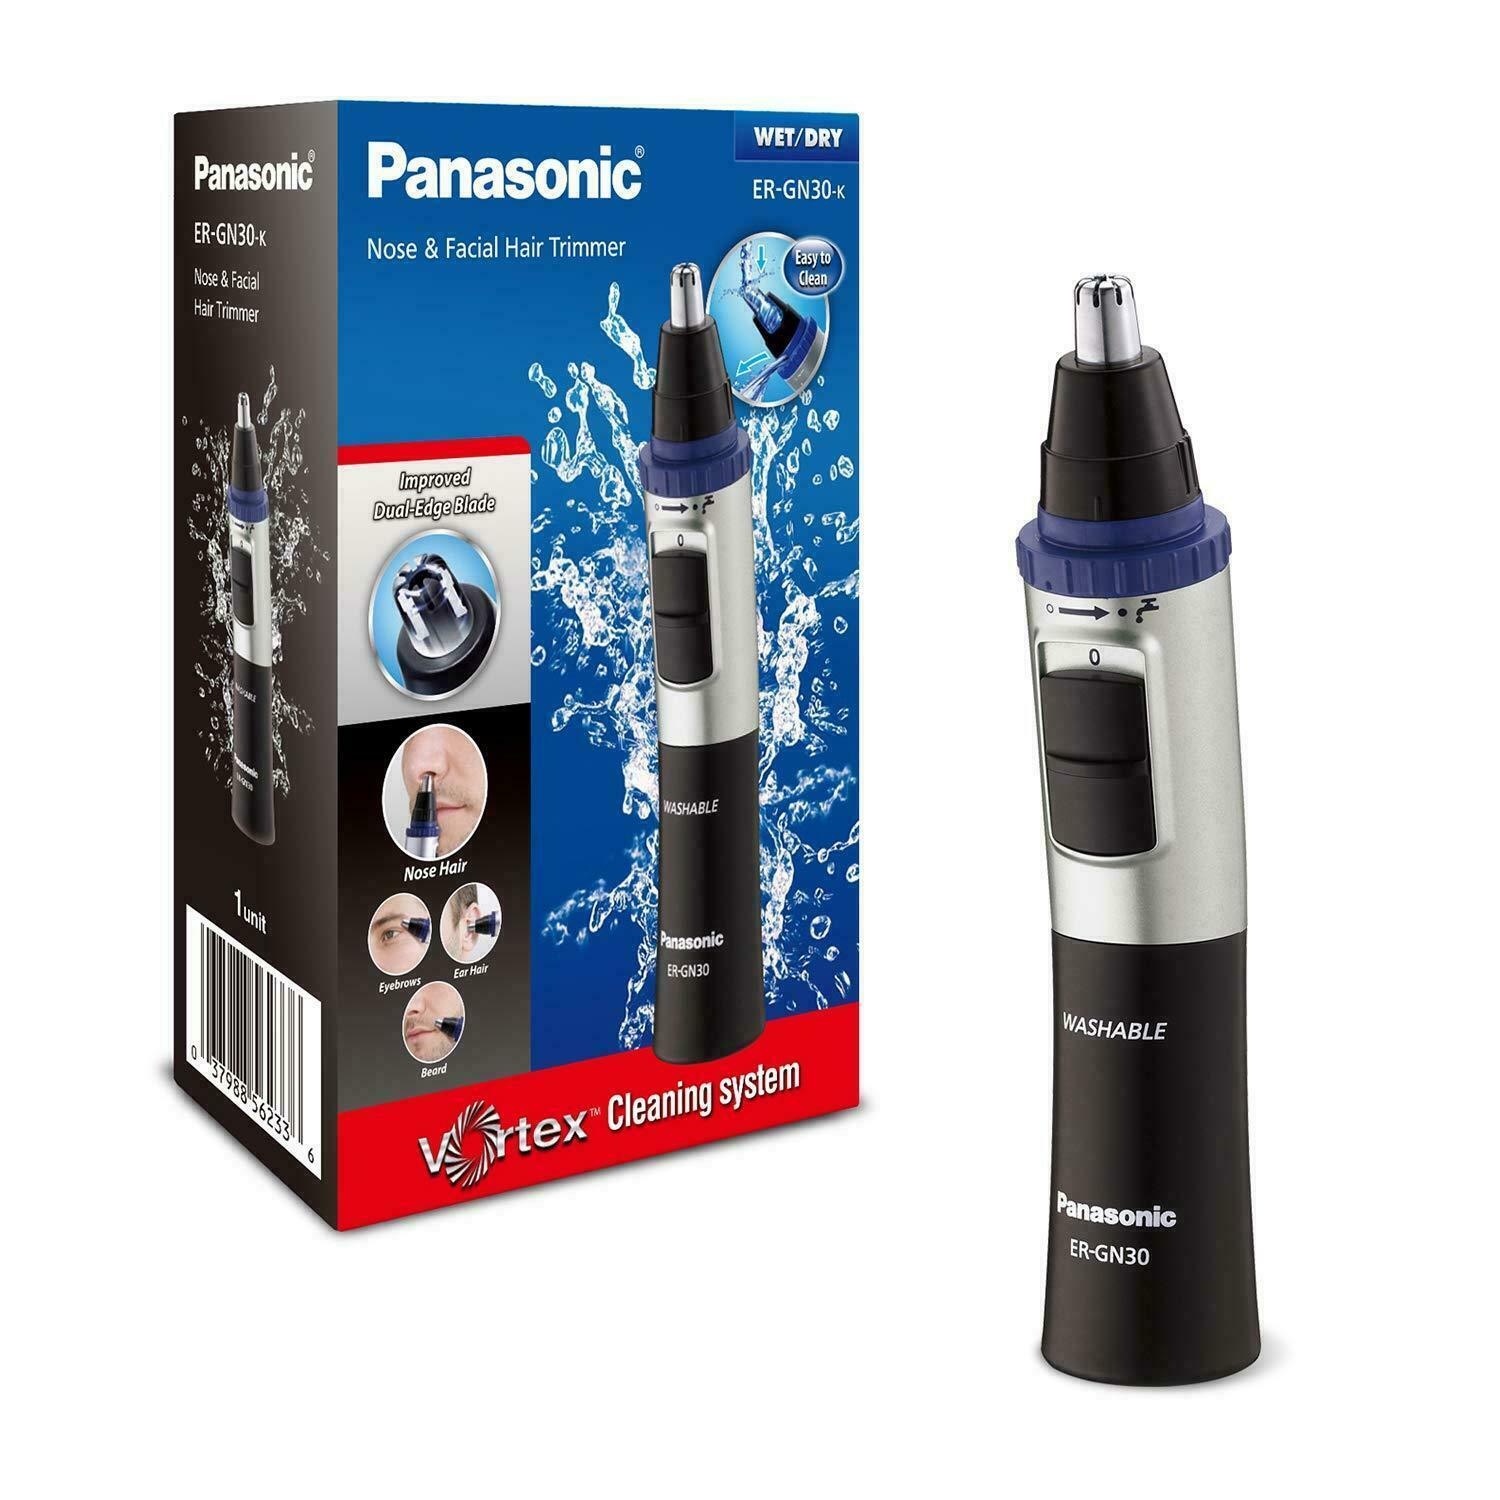 Panasonic Er-gn30-k Black Vortex Wet/dry Nose And Facial Hair Trimmer New